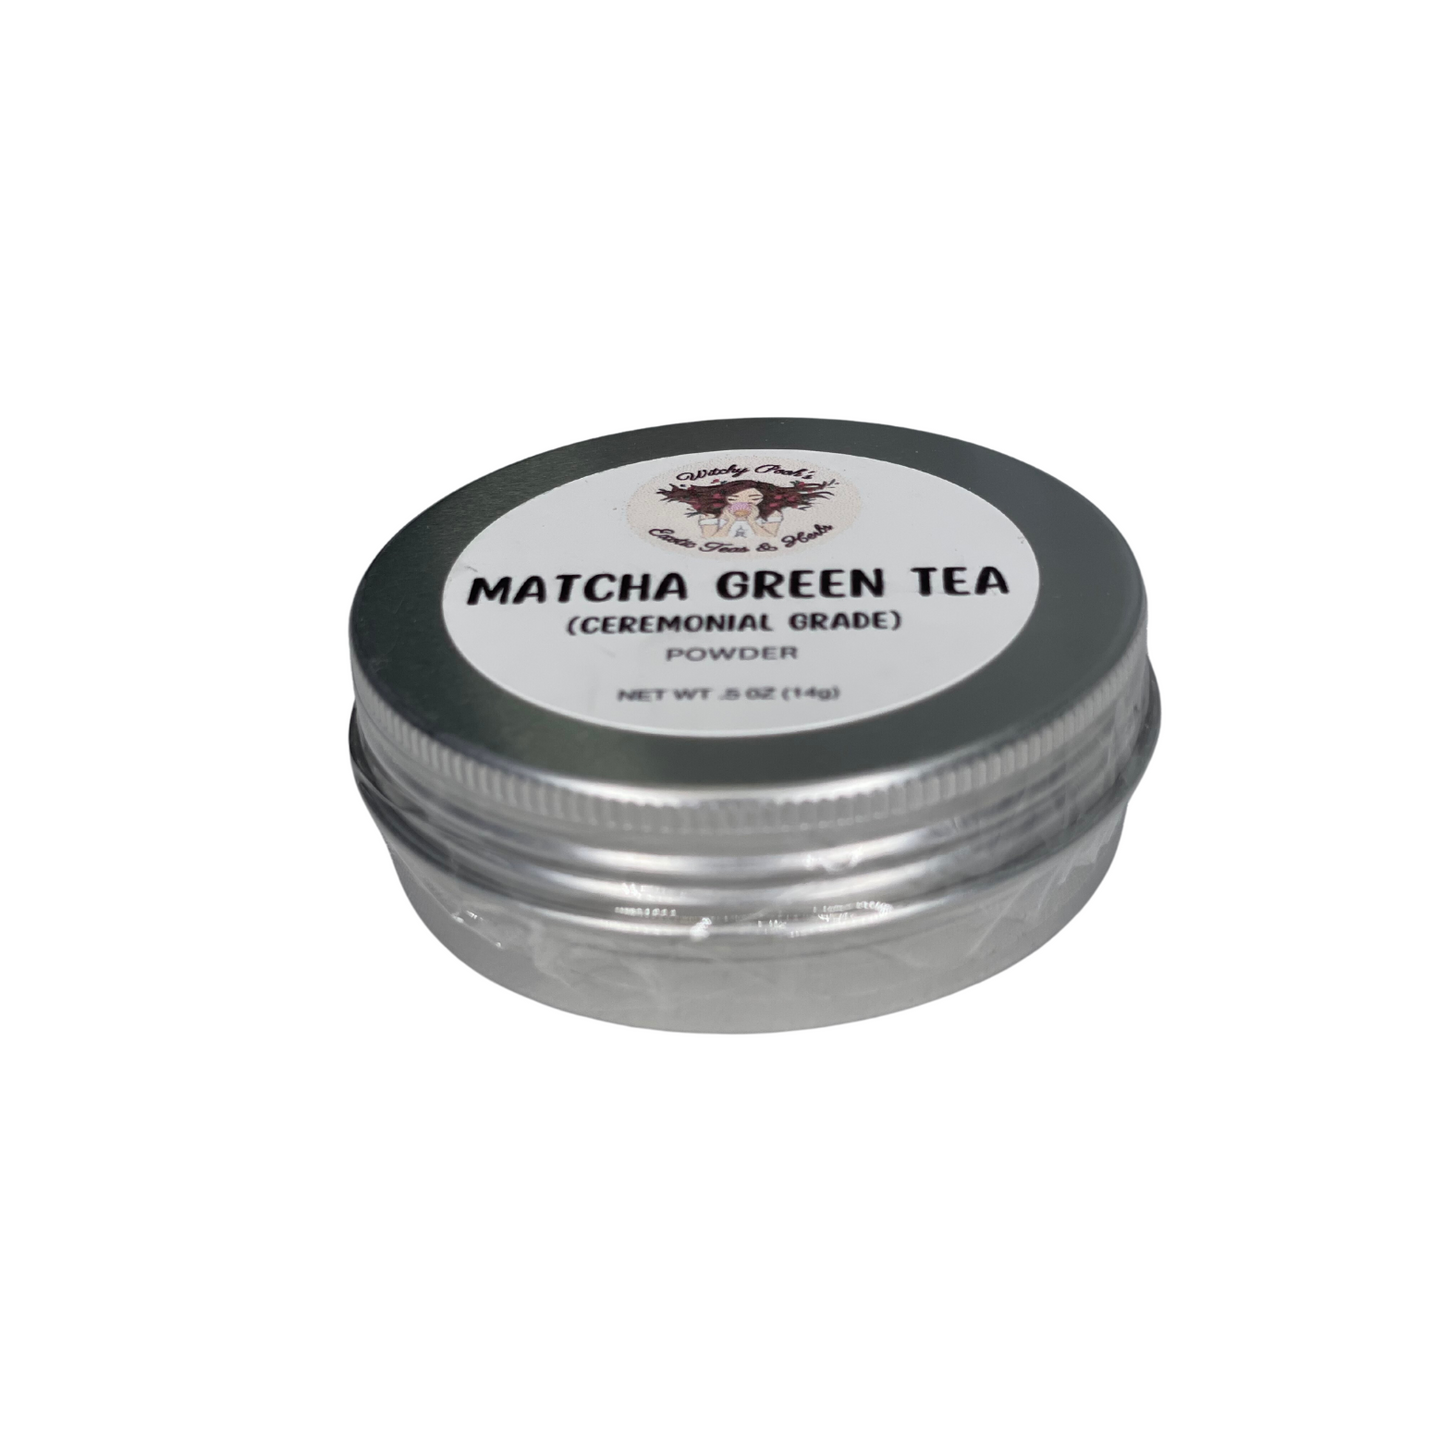 Matcha Green Tea (Ceremonial Grade) Powder